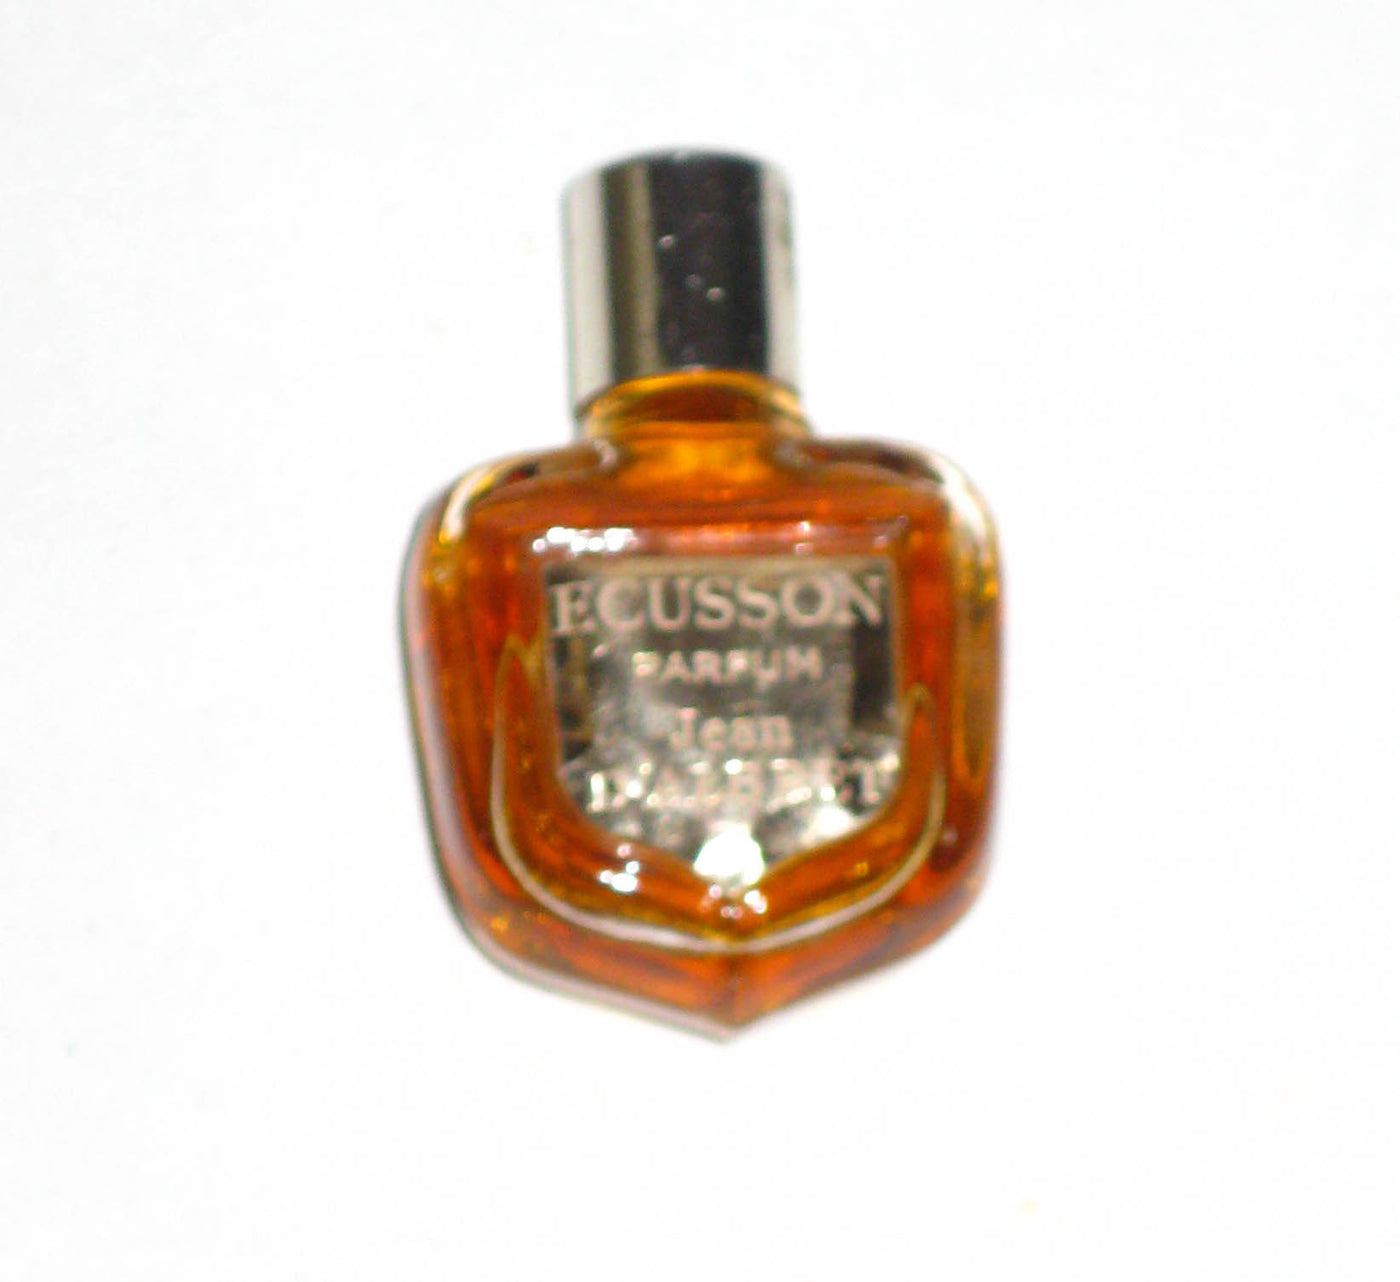 Jean D'Albret Ecusson Parfum Mini